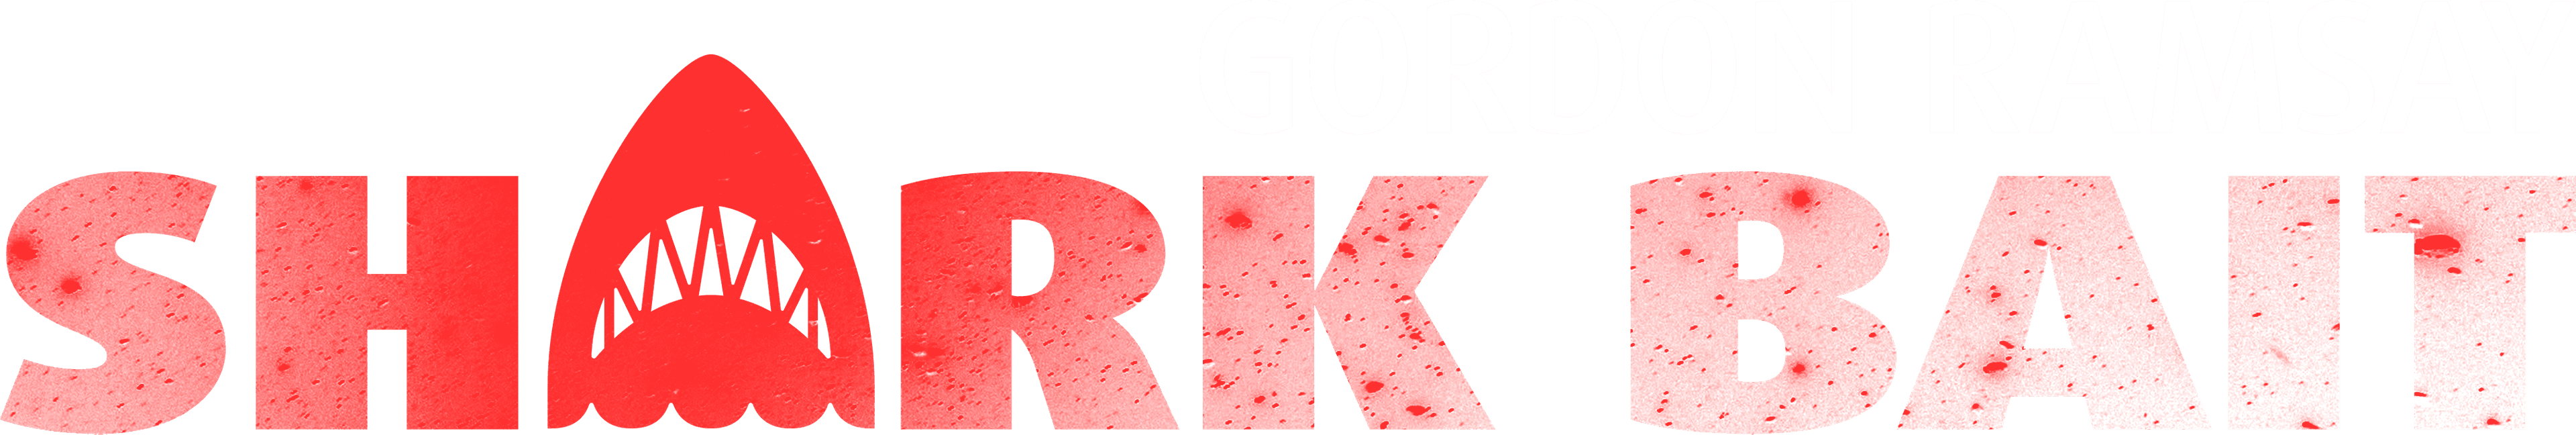 Gordon Ramsay: Shark Bait logo